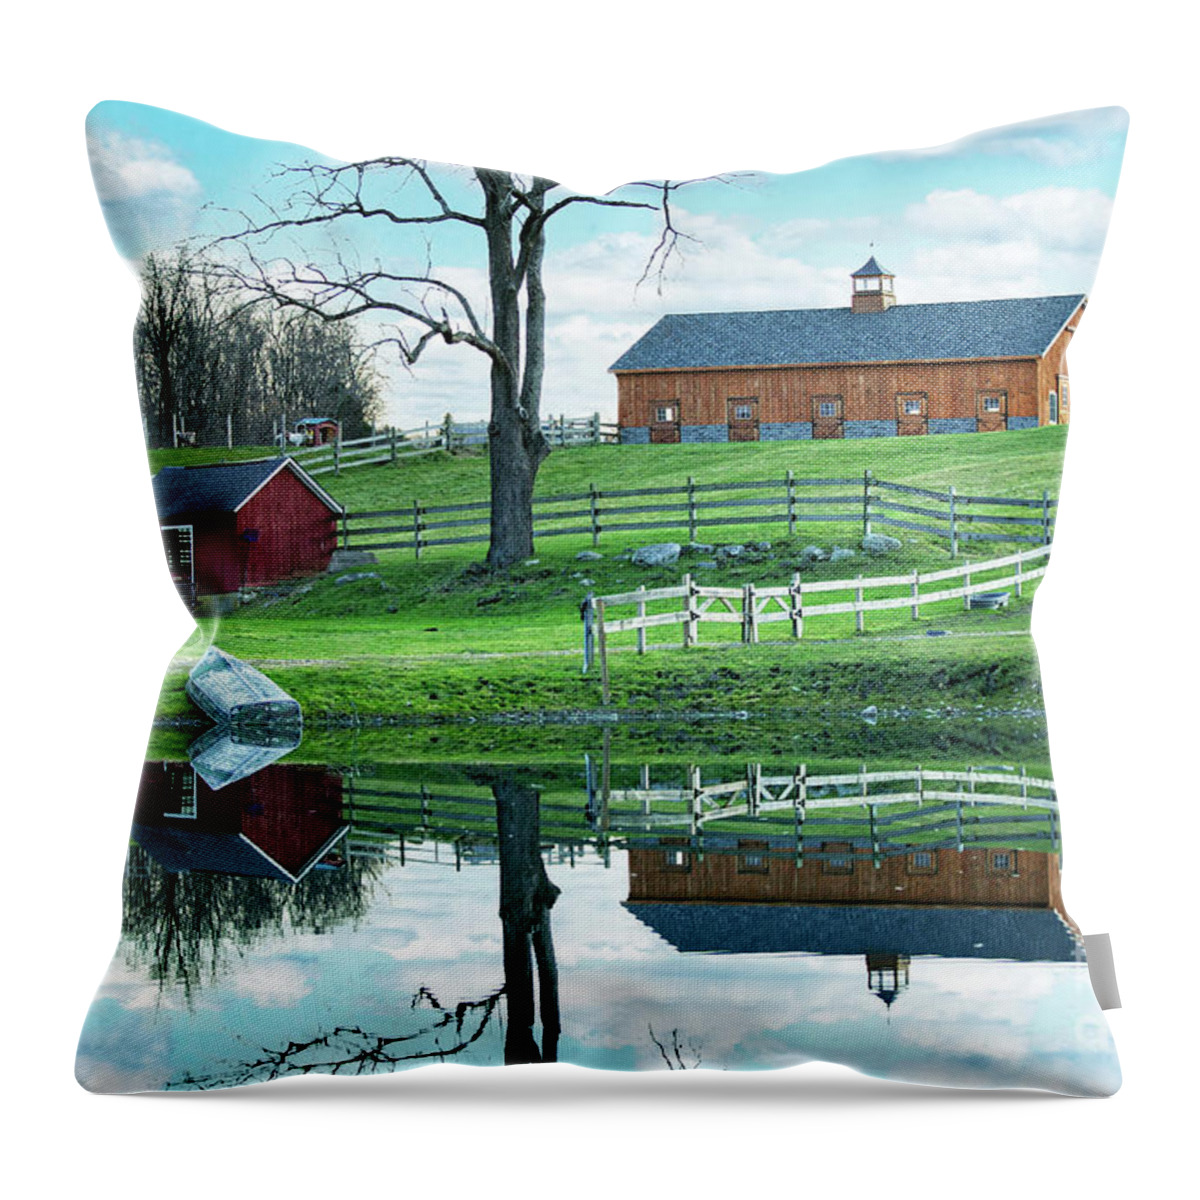 Barn Throw Pillow featuring the photograph Farm Pond by Nicki McManus